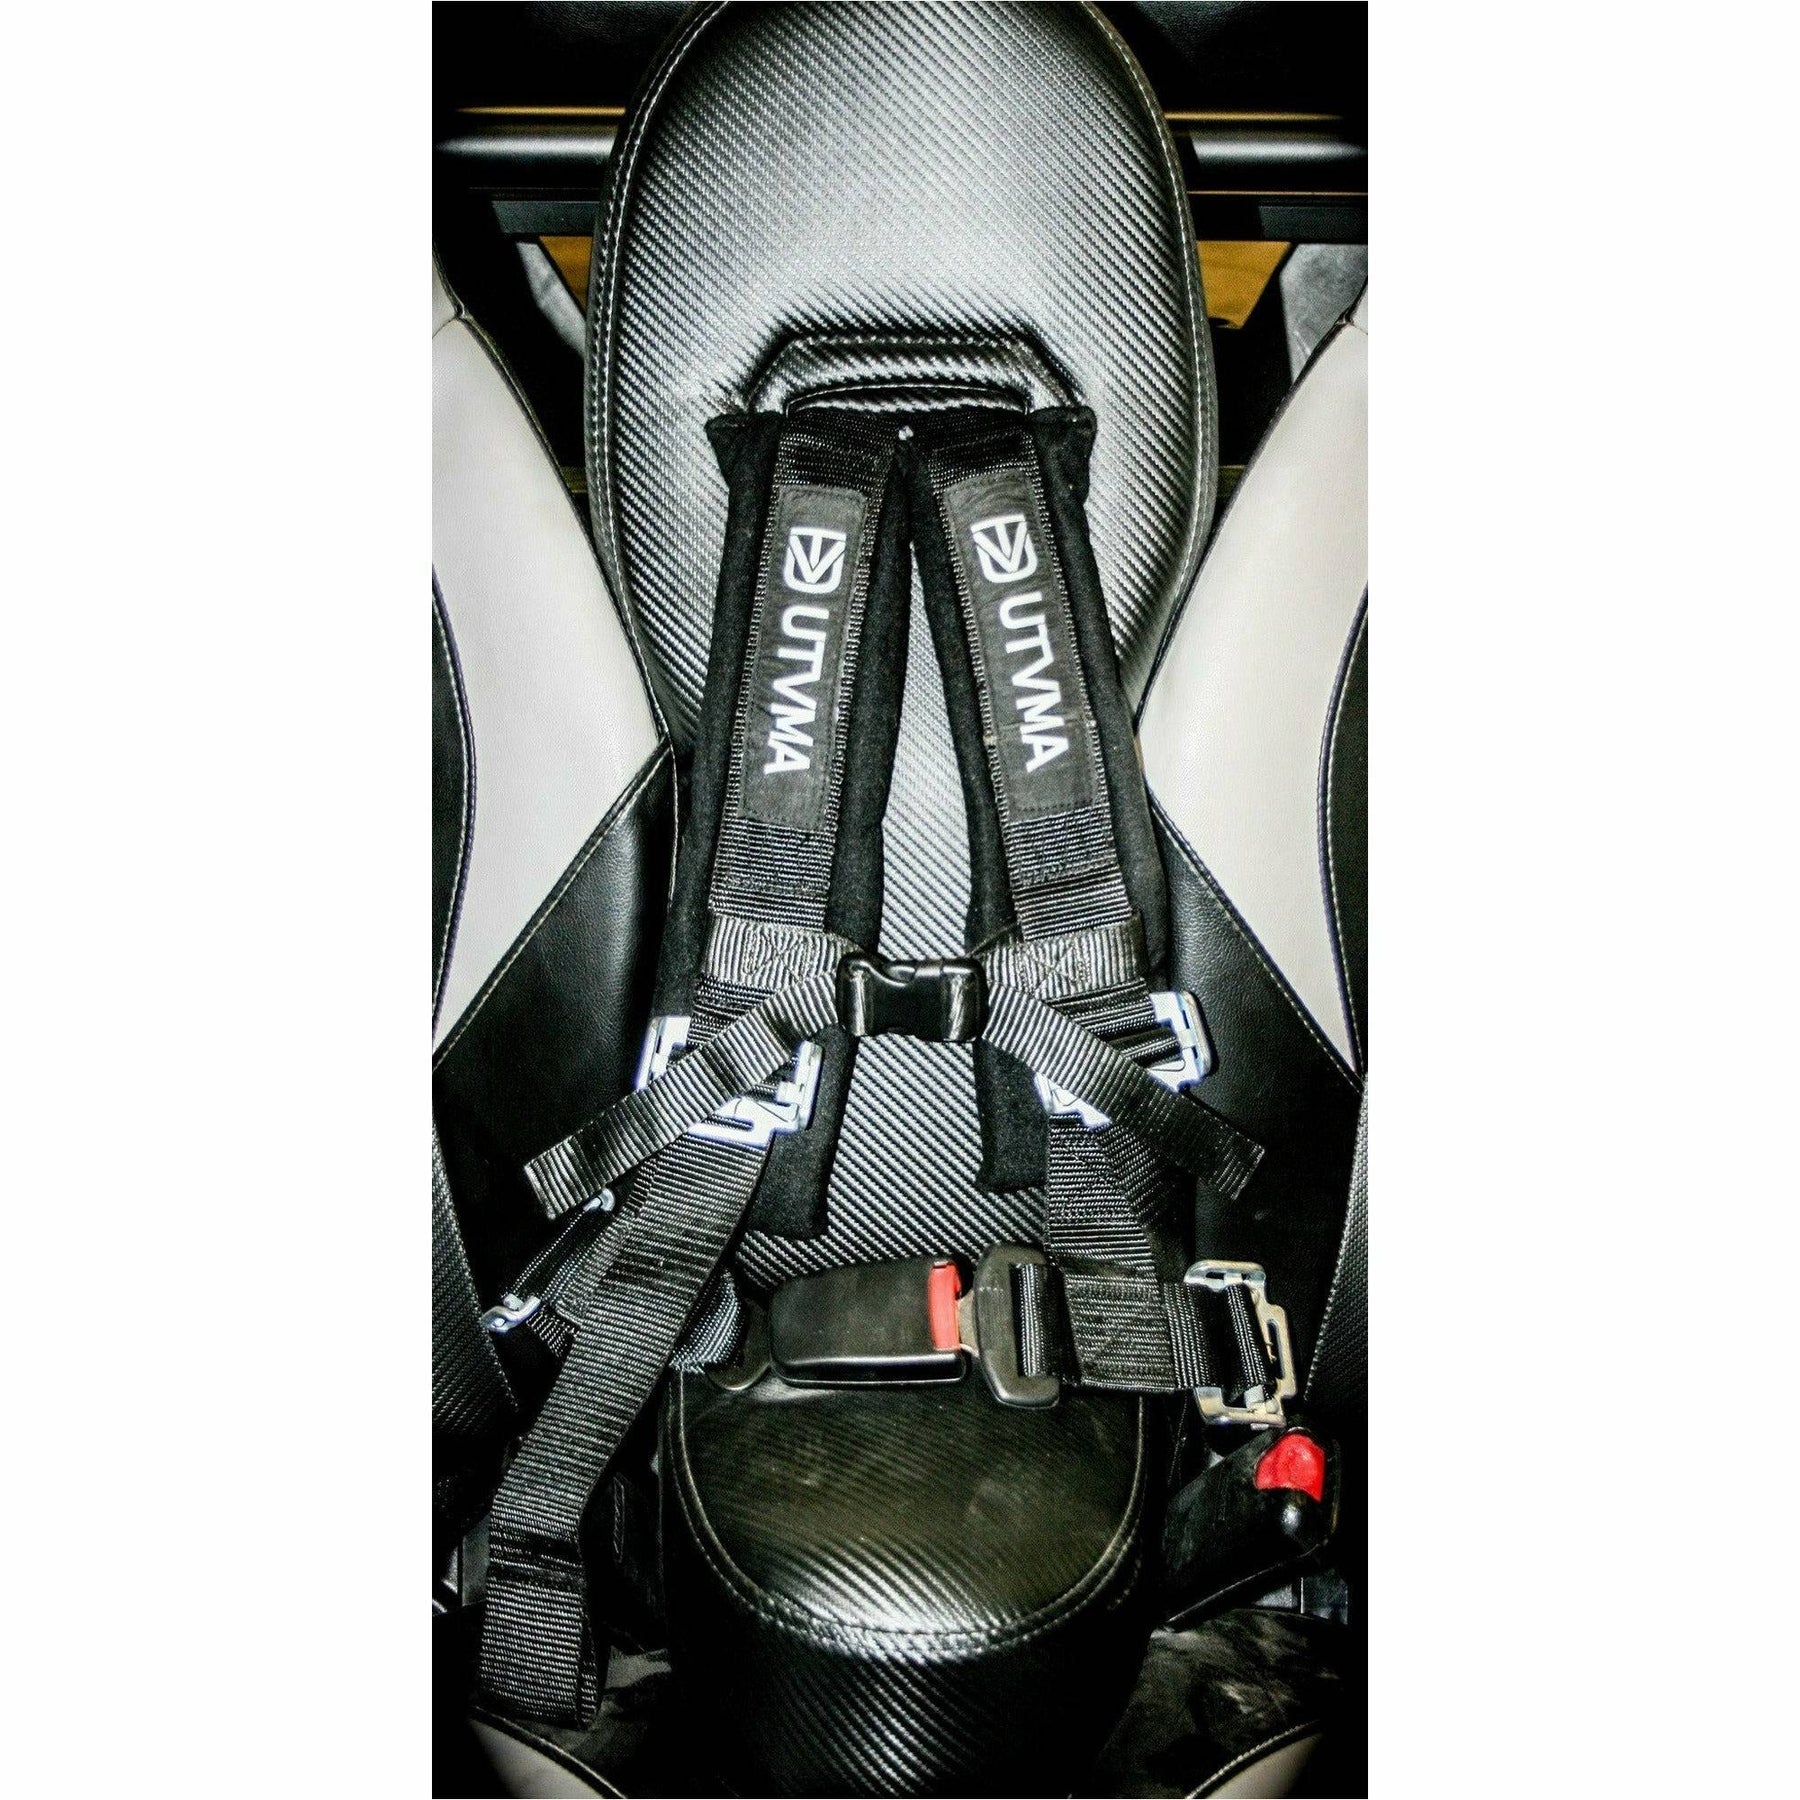 UTV Mountain Accessories Polaris RZR (2008-2014) Bump Seat with Harness